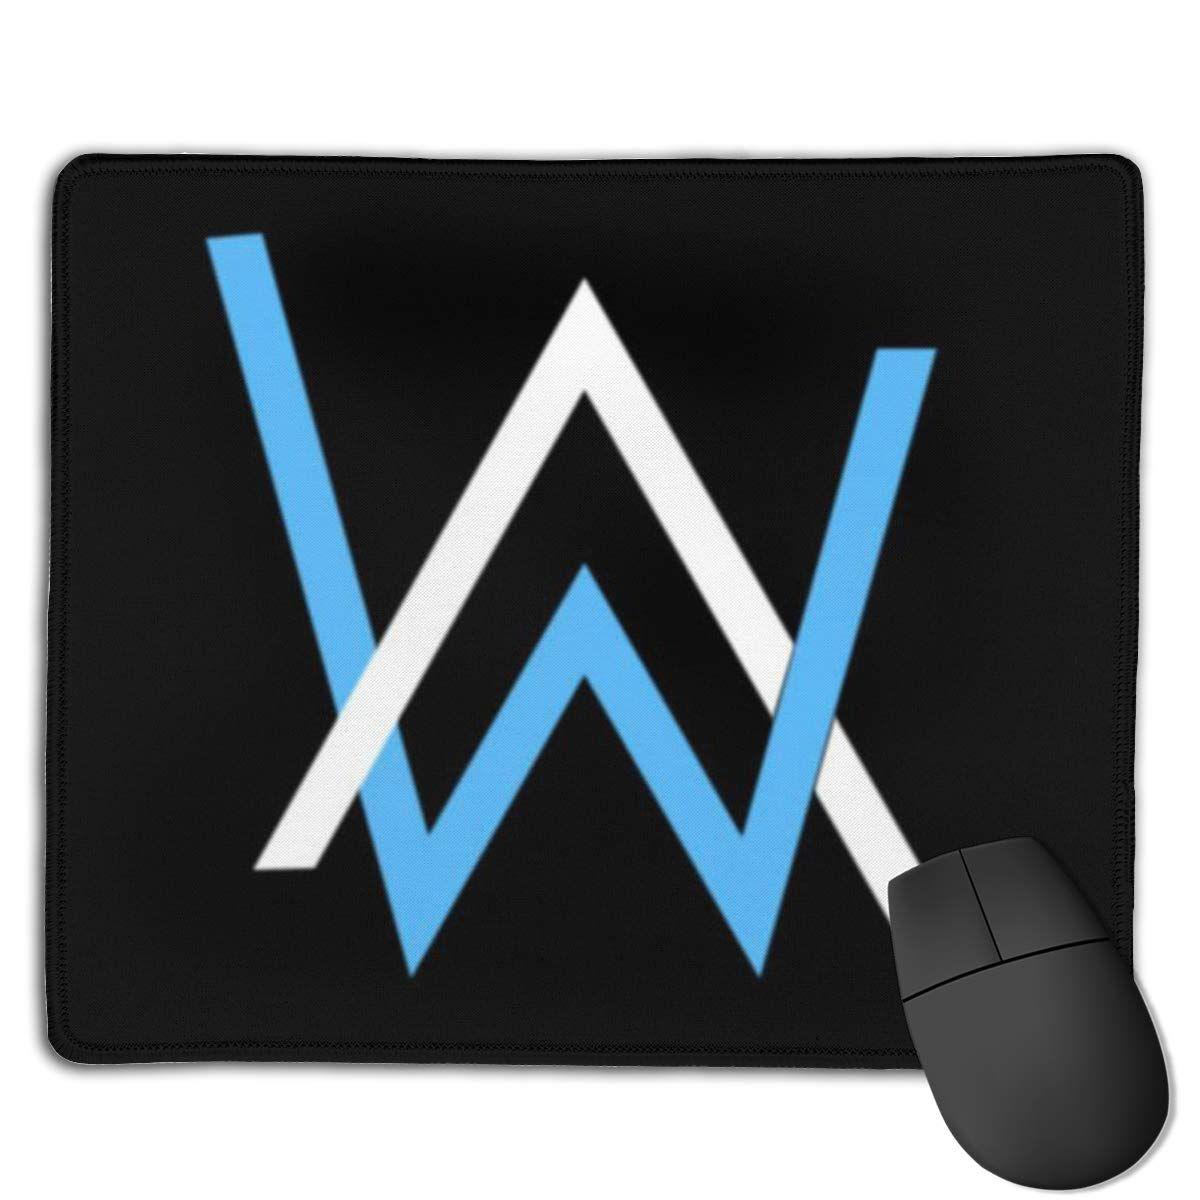 Walker Logo - Amazon.com : Alan Walker Logo Personality Mouse Pad Gaming Anti-Slip ...